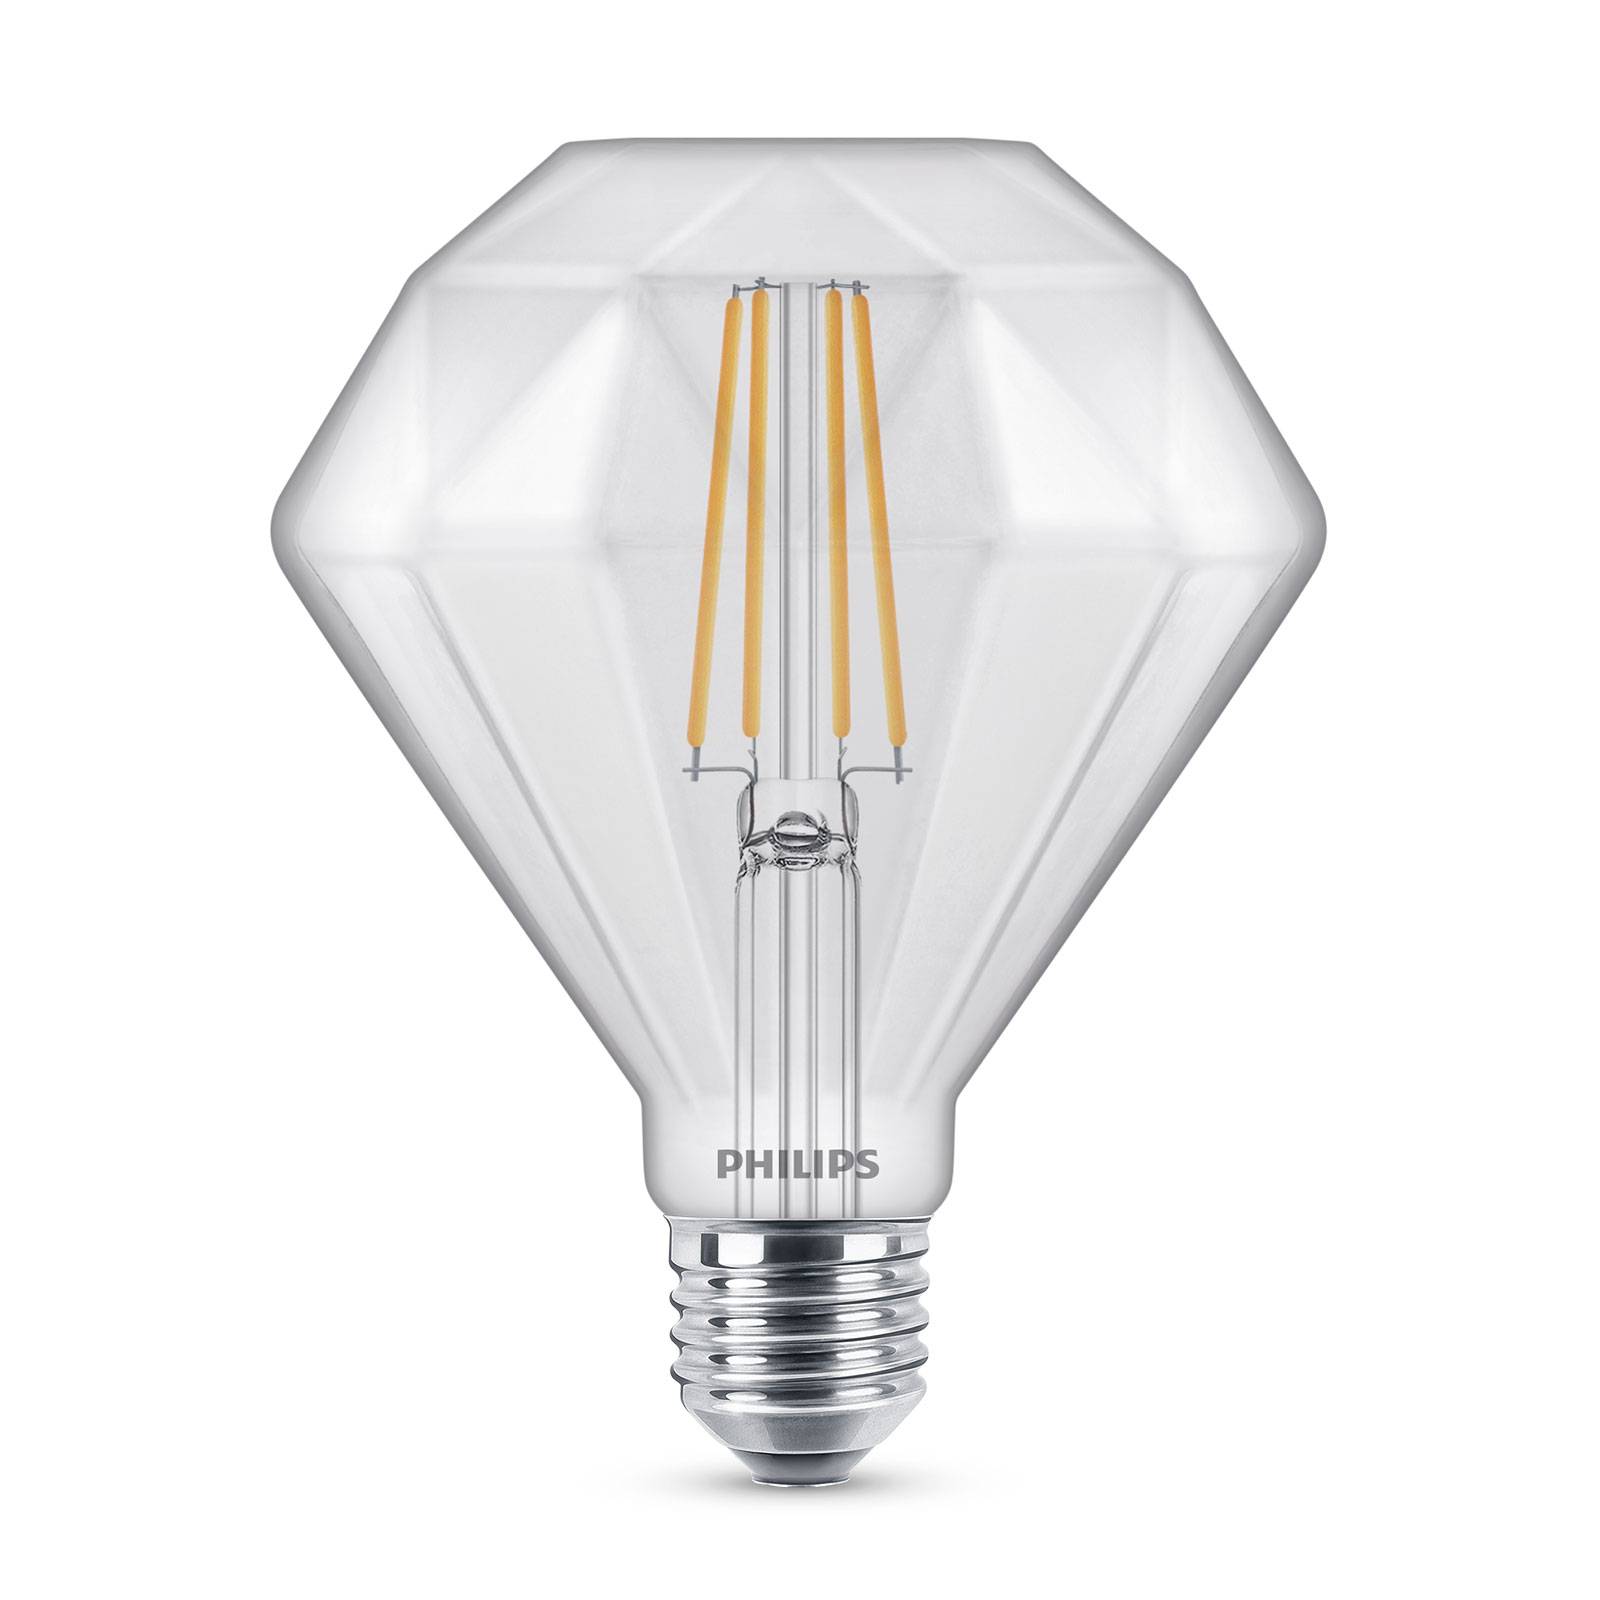 Kort geleden bescherming amateur Philips Classic Diamond LED lamp E27 5W | Lampen24.nl